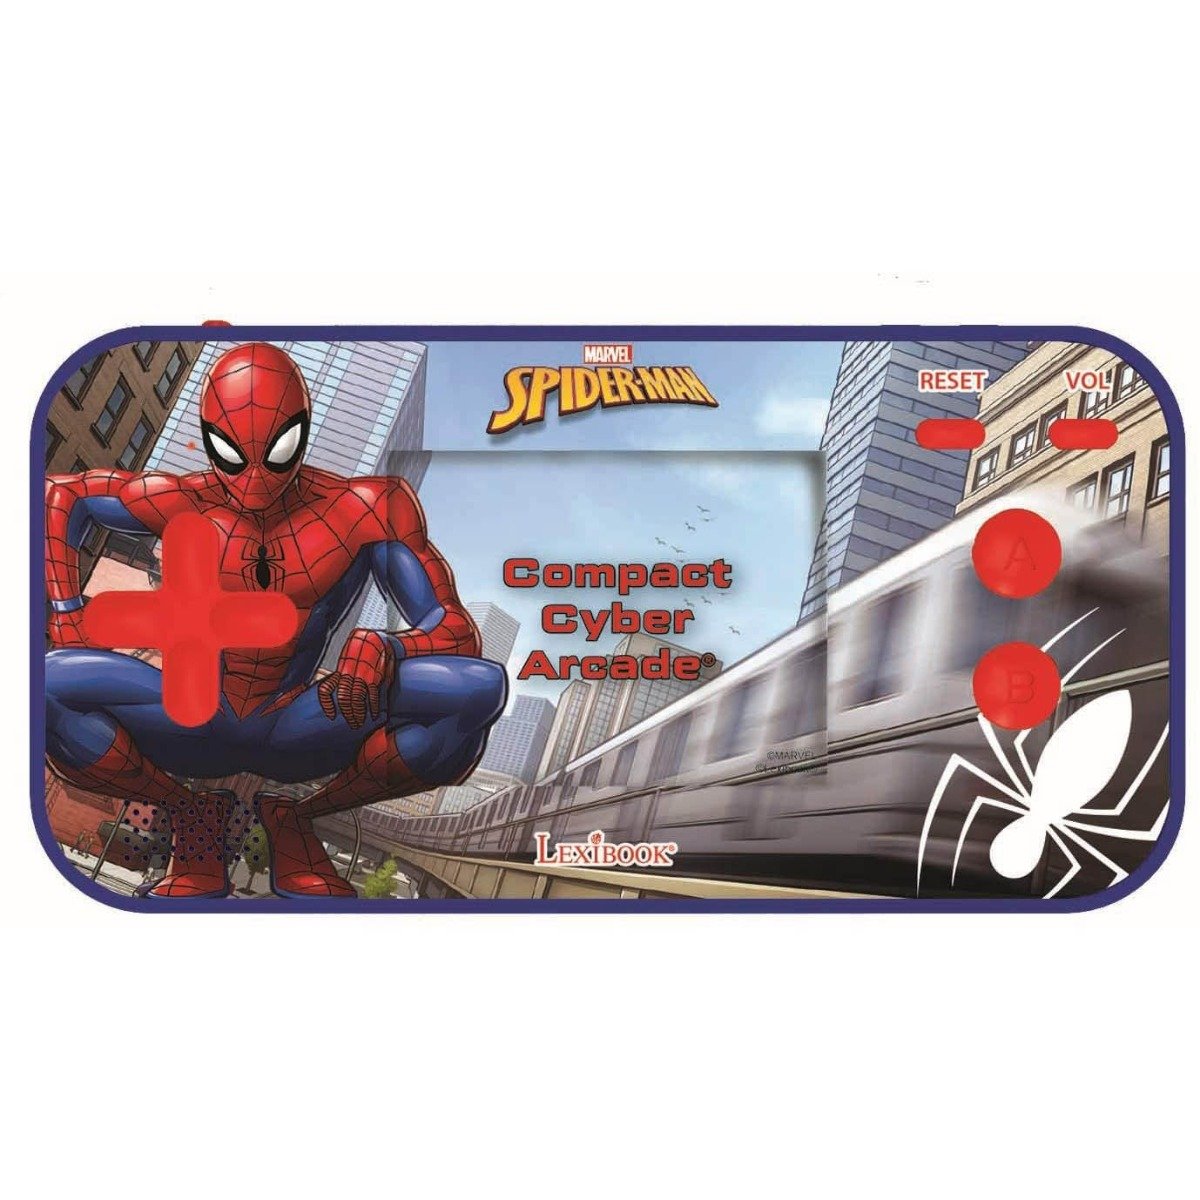 Consola portabila Cyber Arcade Lexibook, Spiderman, 150 jocuri noriel.ro